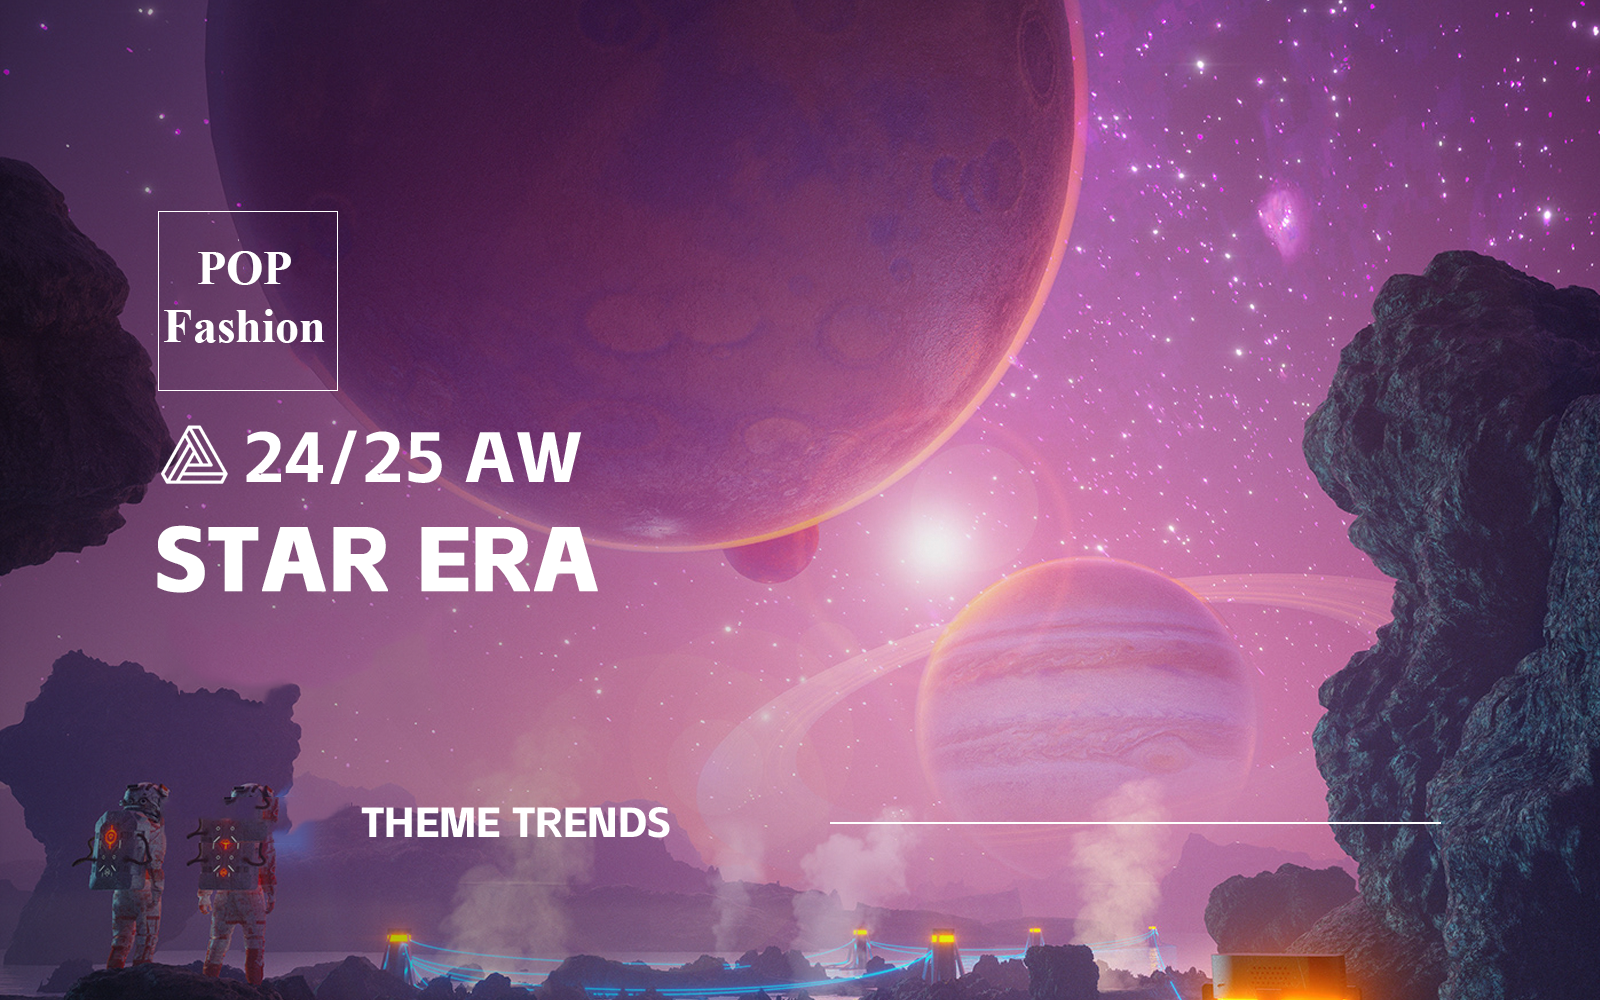 Star Era -- The A/W 24/25 Thematic Trend